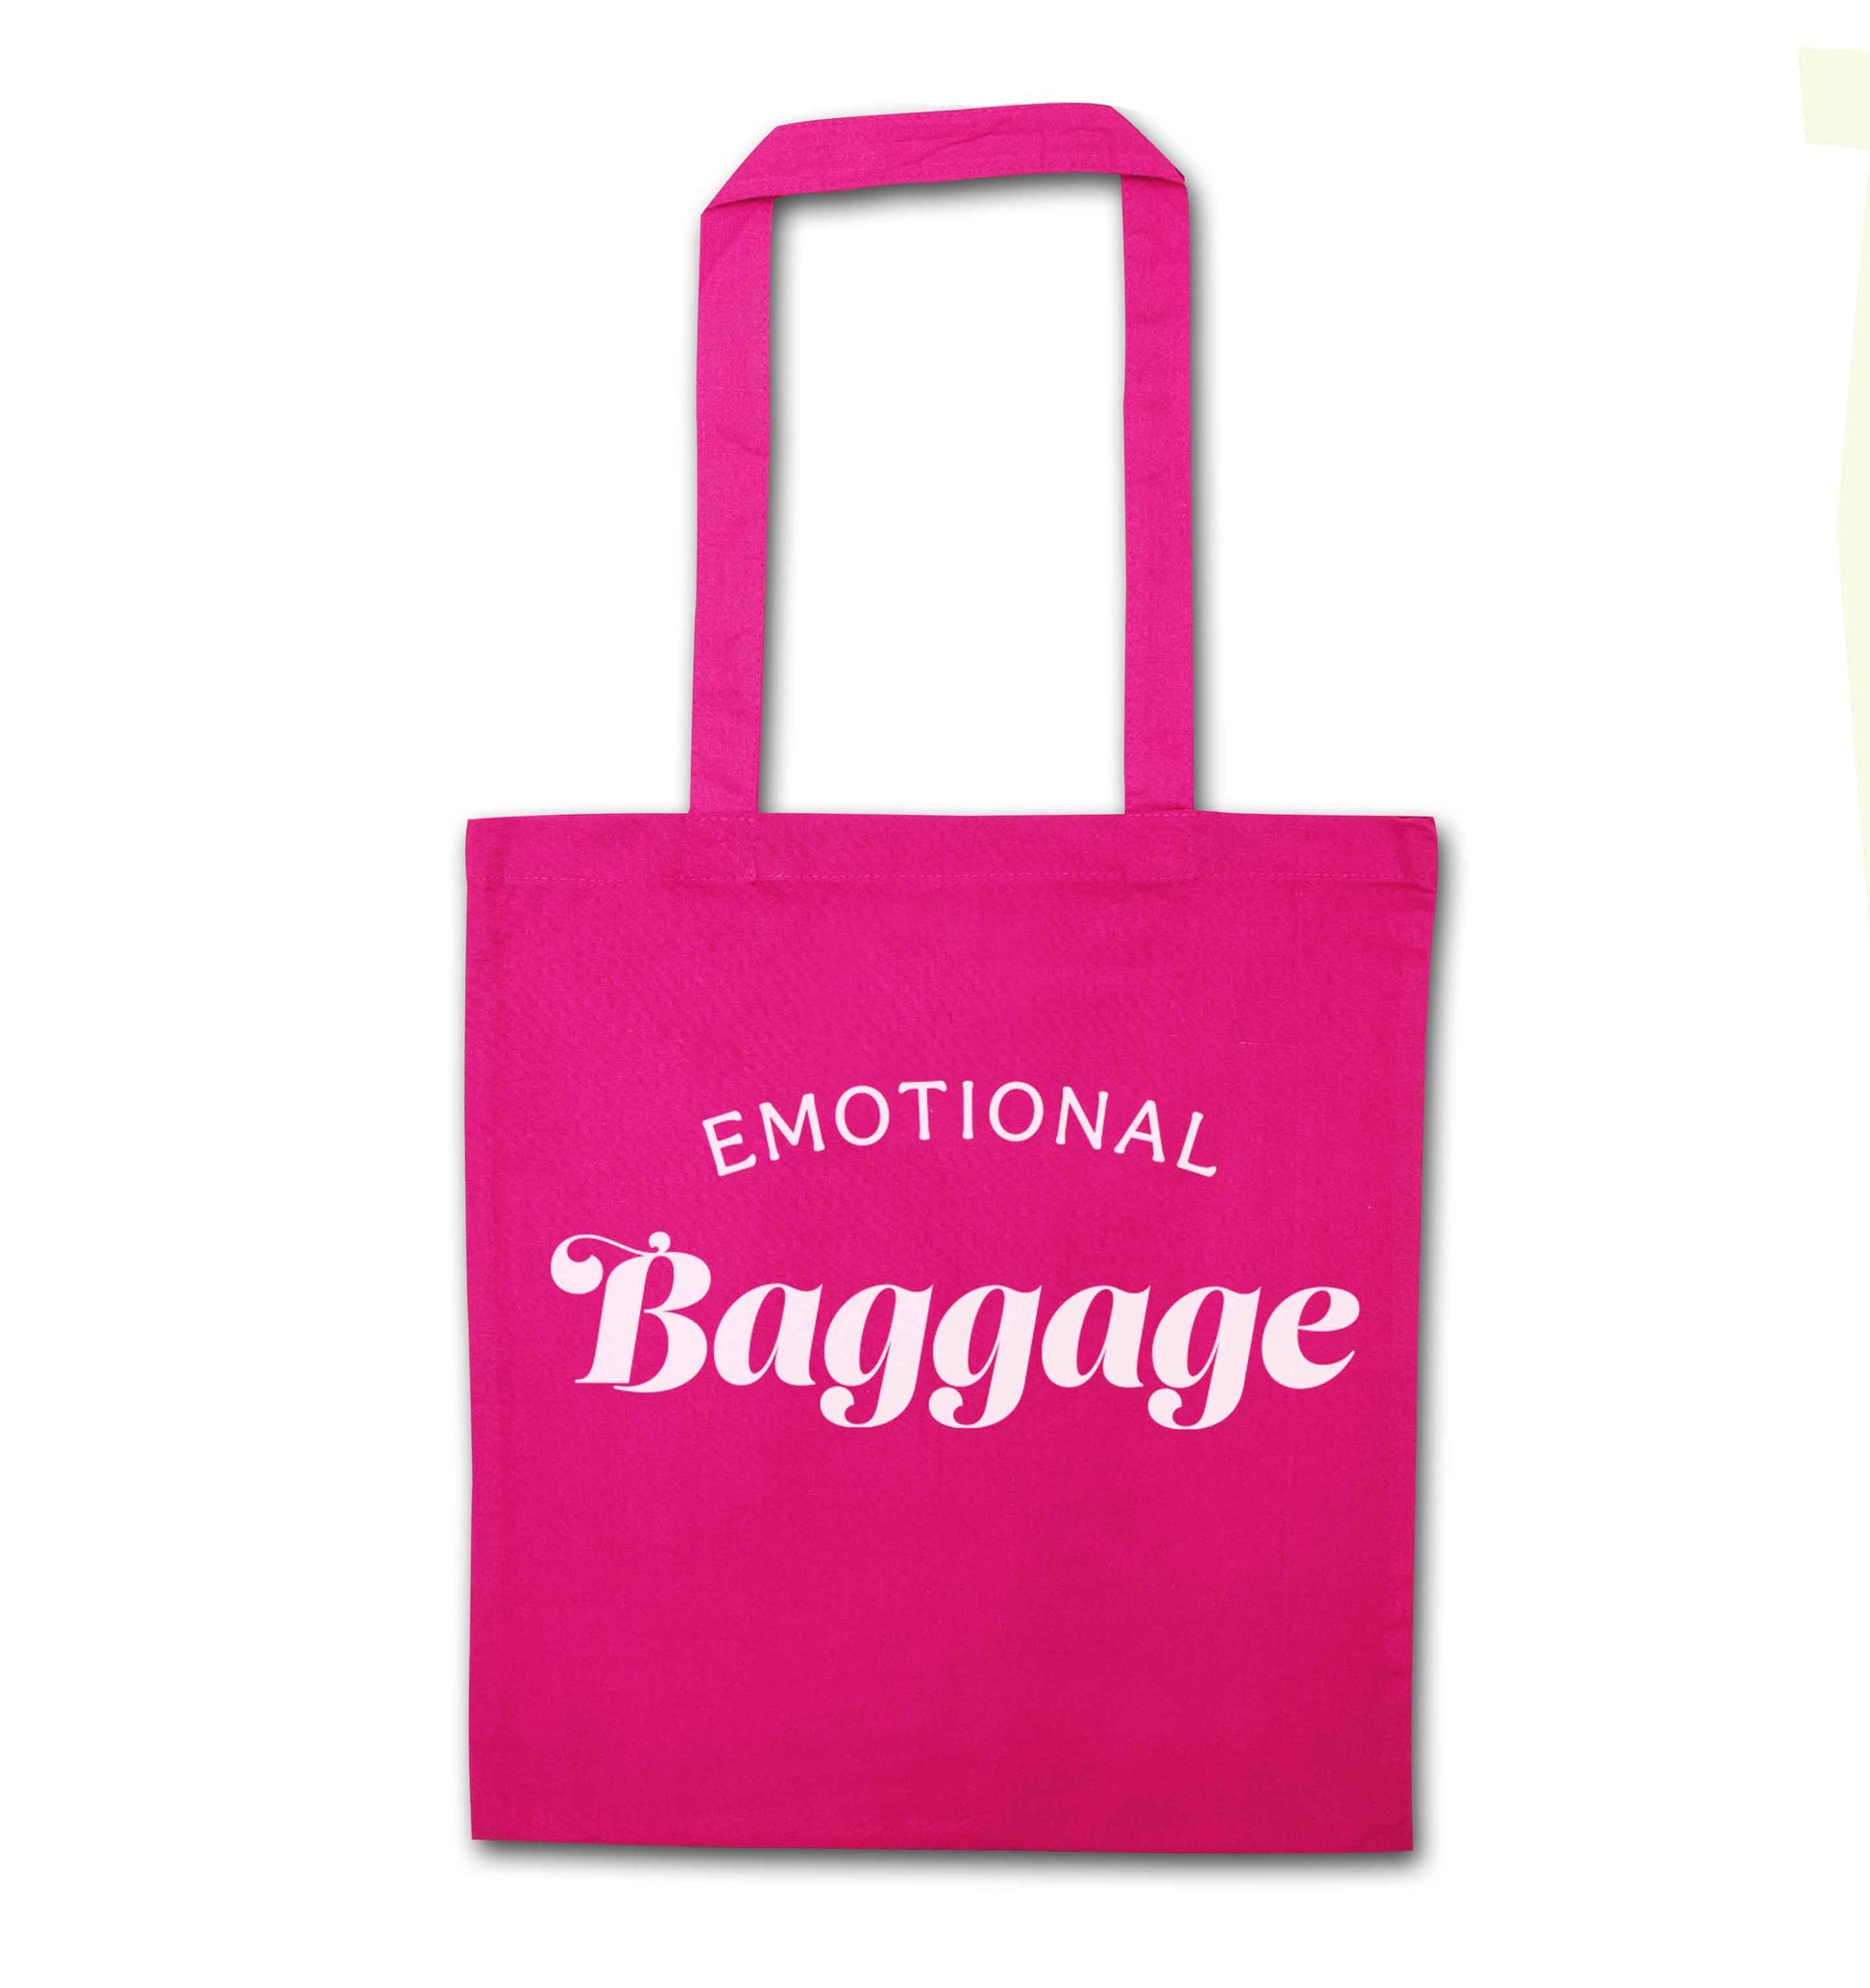 Emotional baggage pink tote bag